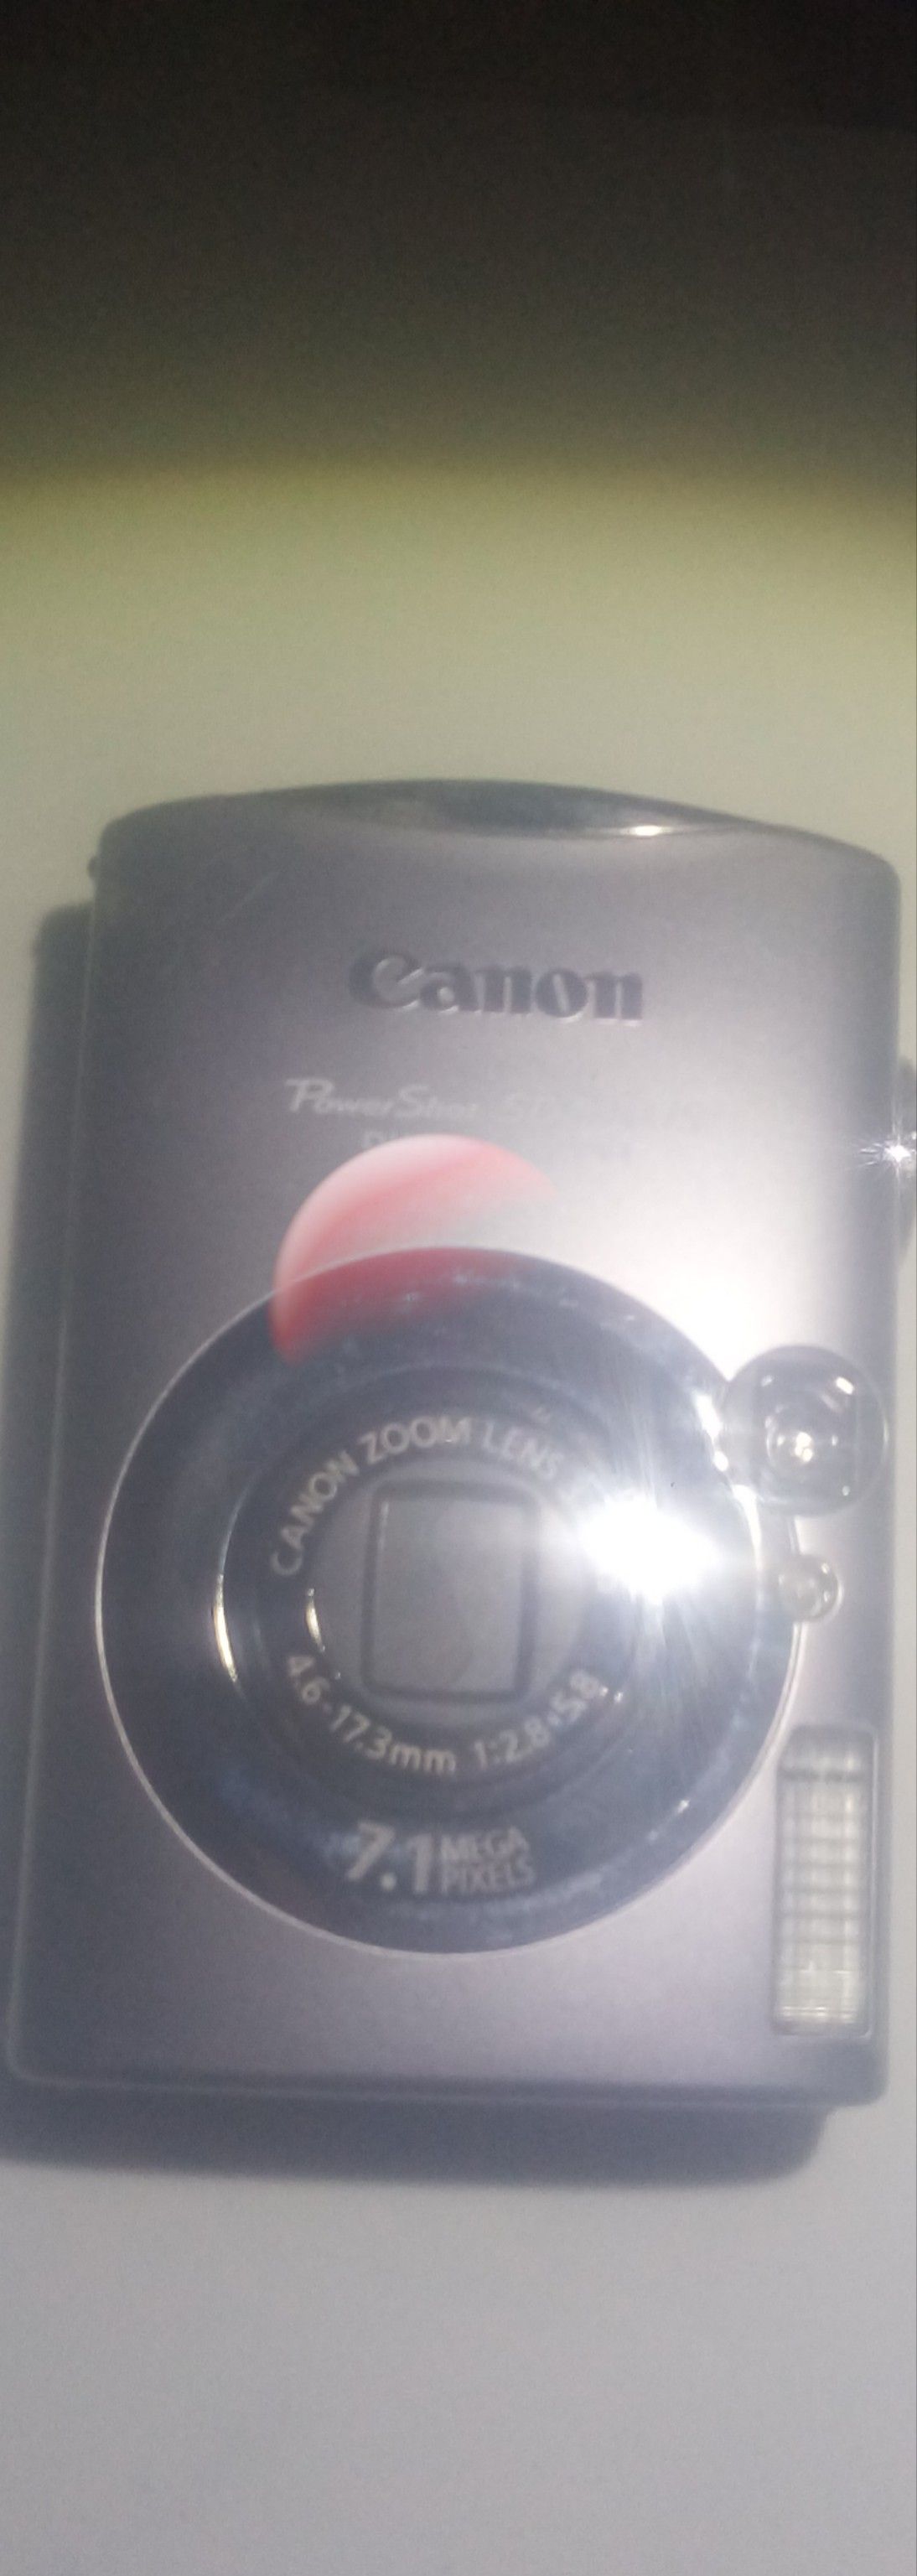 Canon Power Shot SD800 IS digital elph